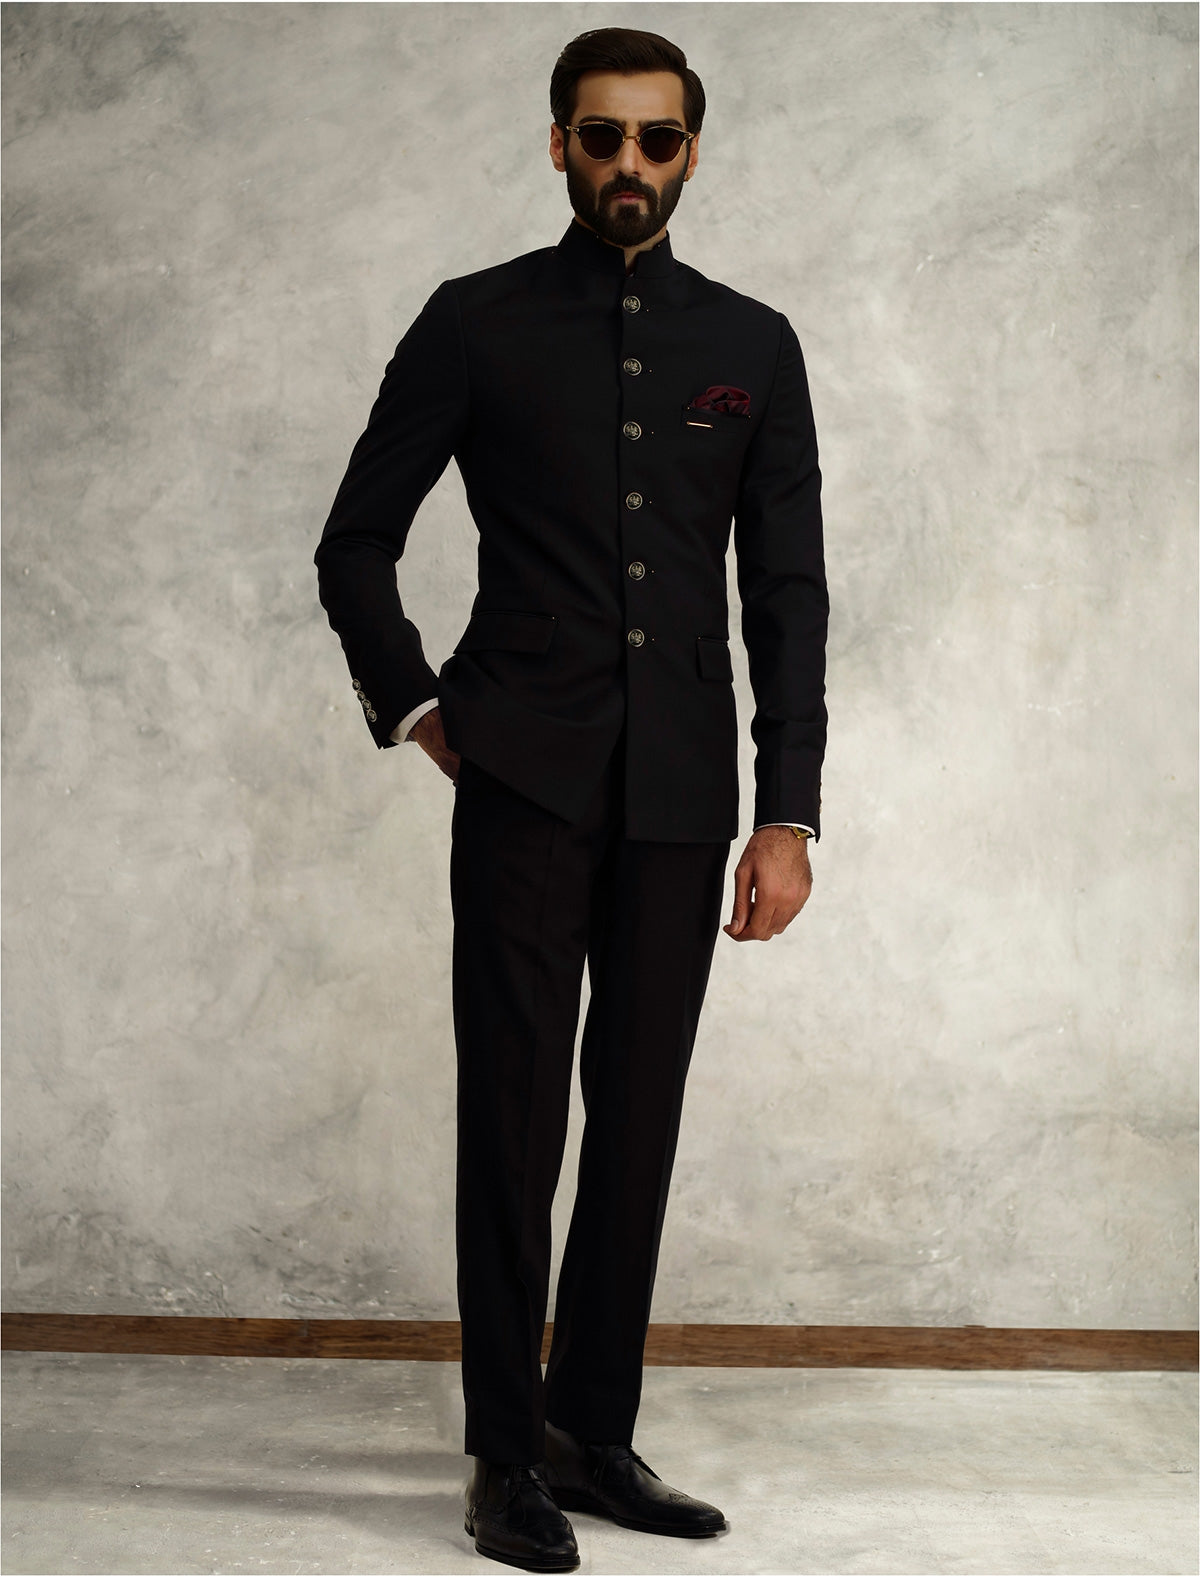 Details more than 65 prince coat suit latest